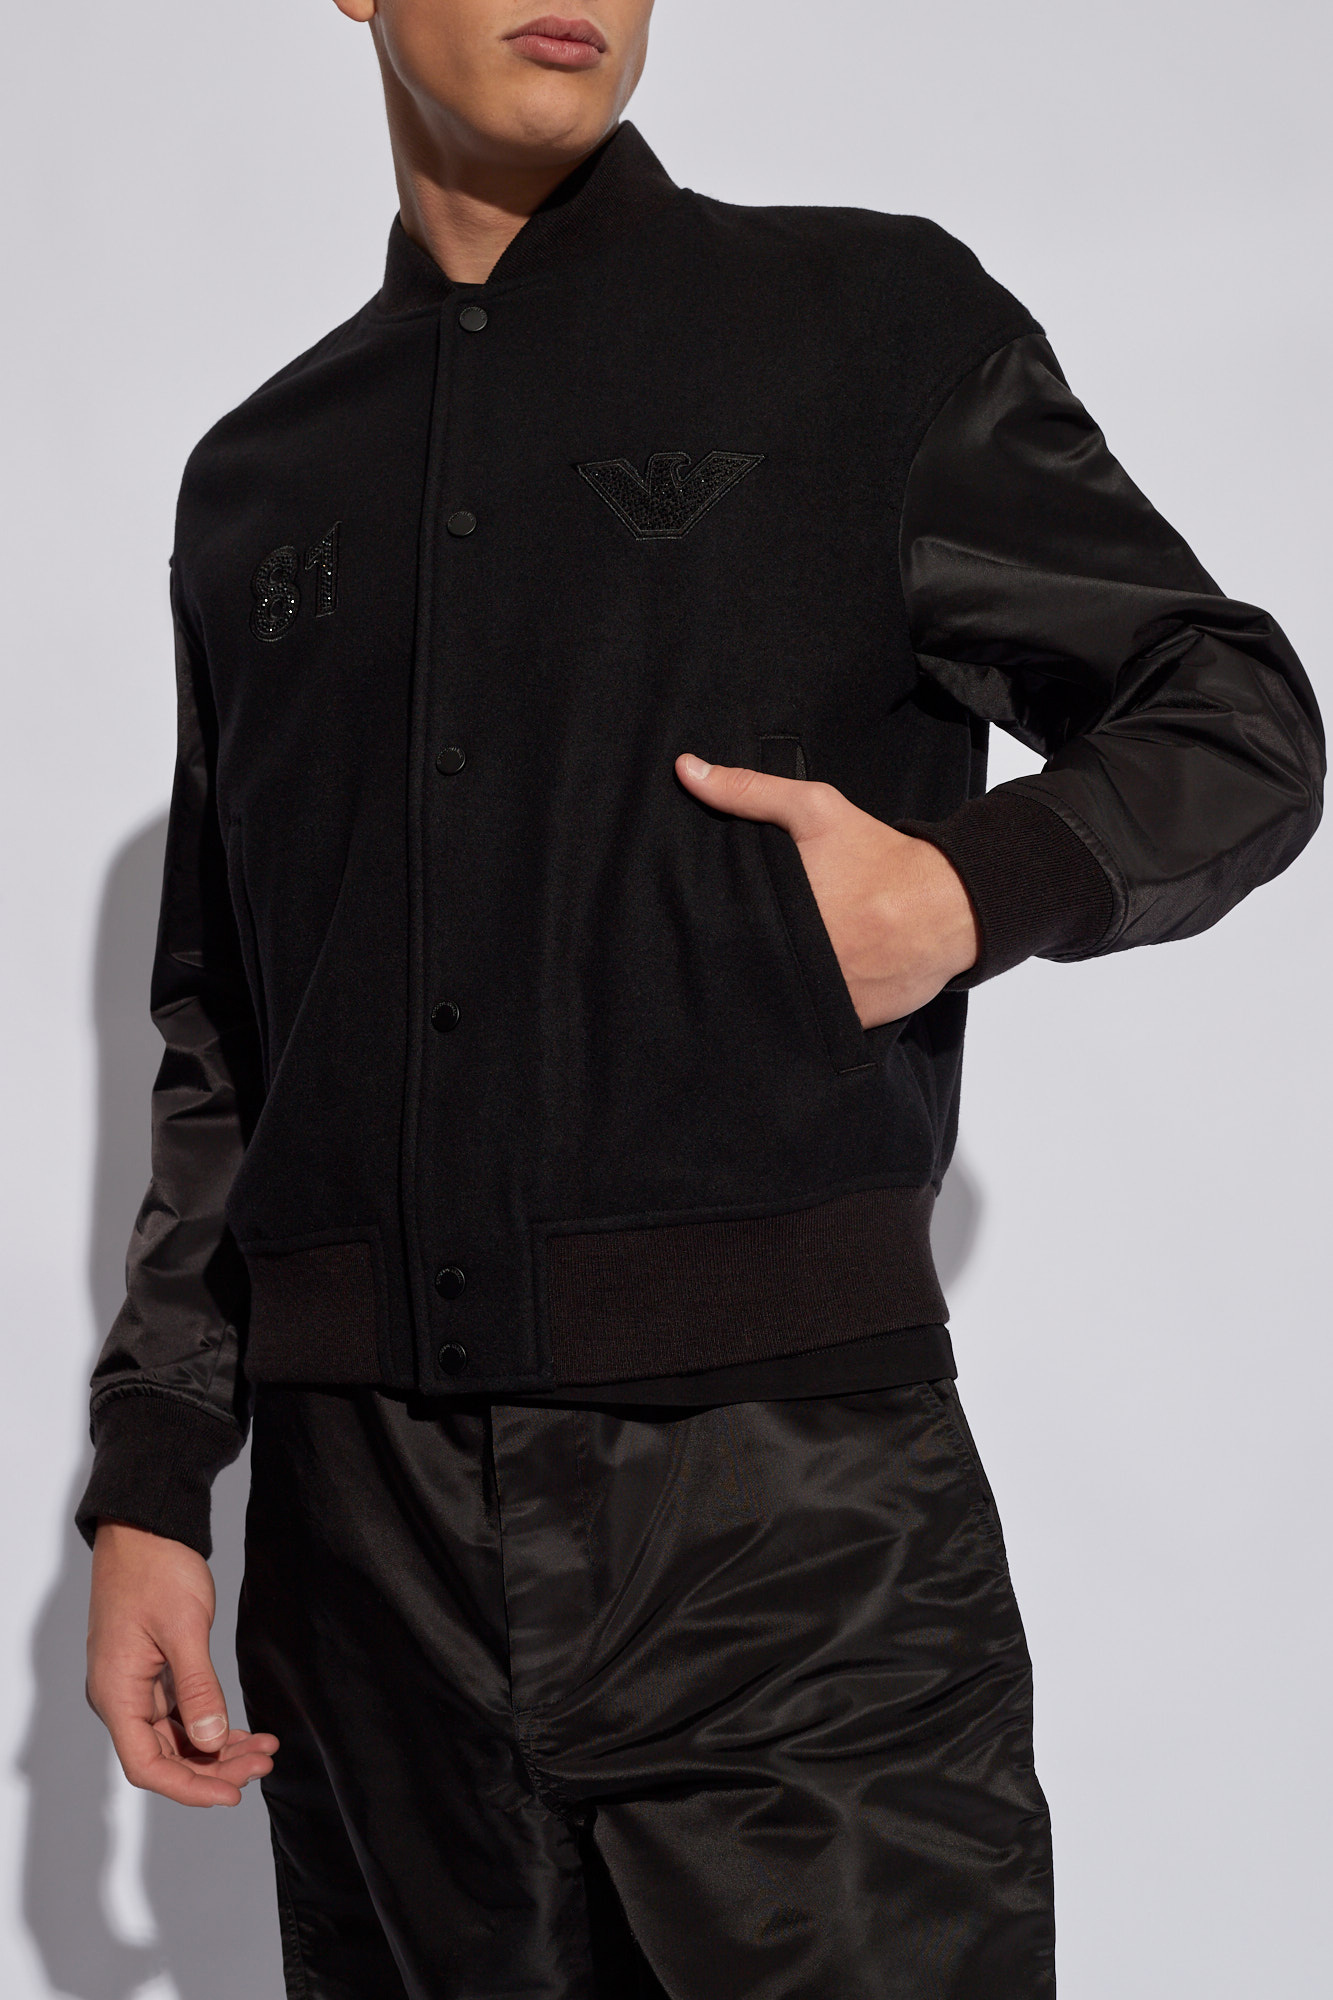 Emporio Armani Bomber jacket